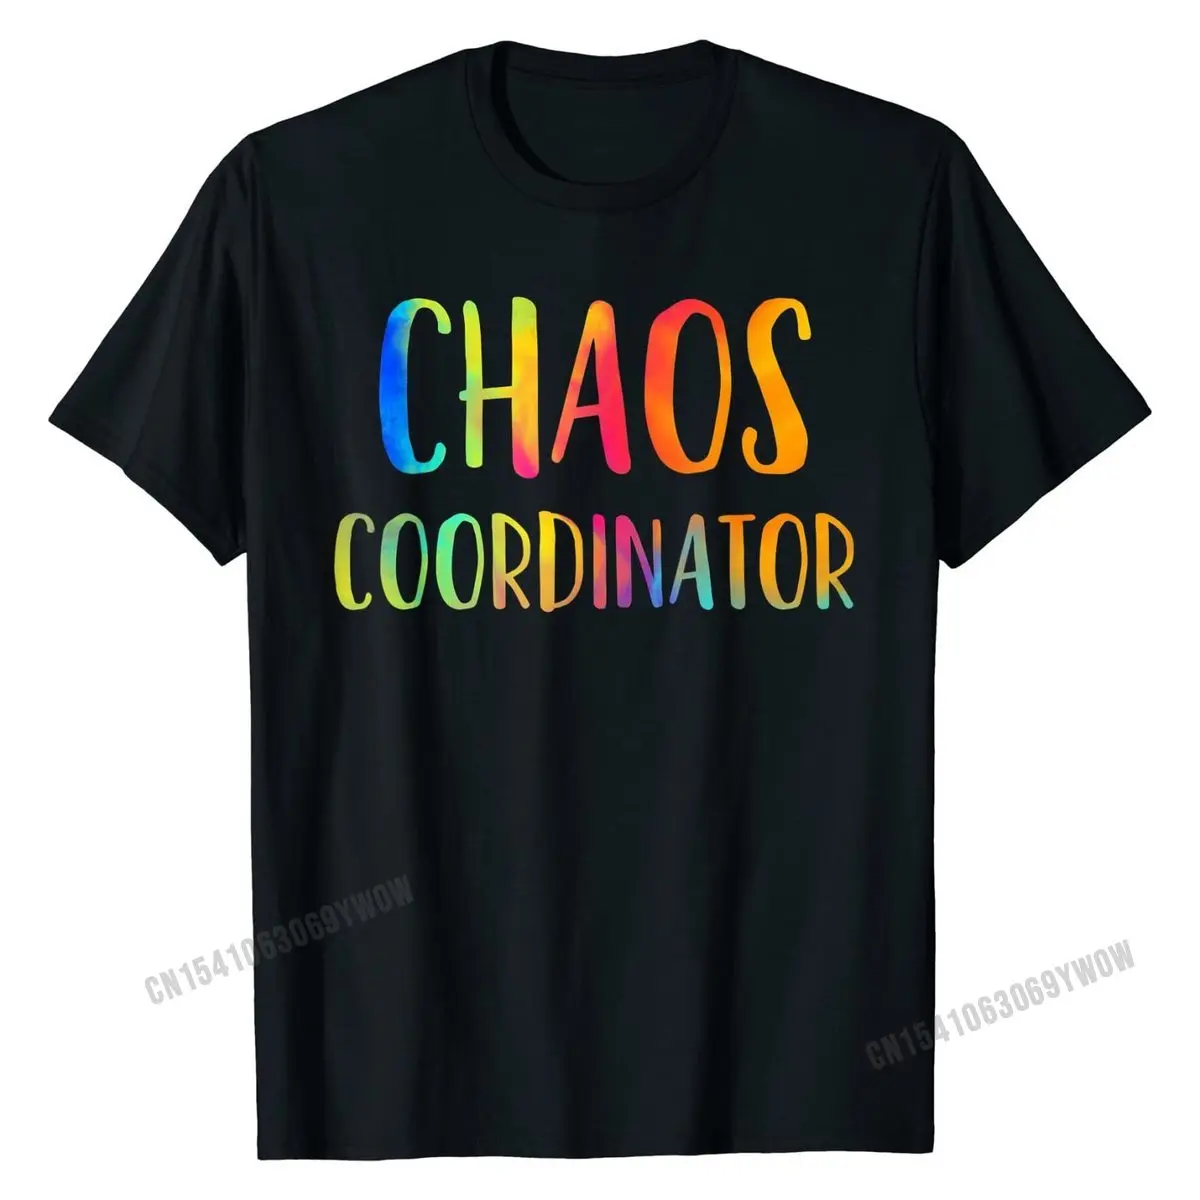 Chaos Coordinator Funny School Teacher Appreciation Gifts T-Shirt T Shirt Slim Fit Family Cotton Men Tshirts Party